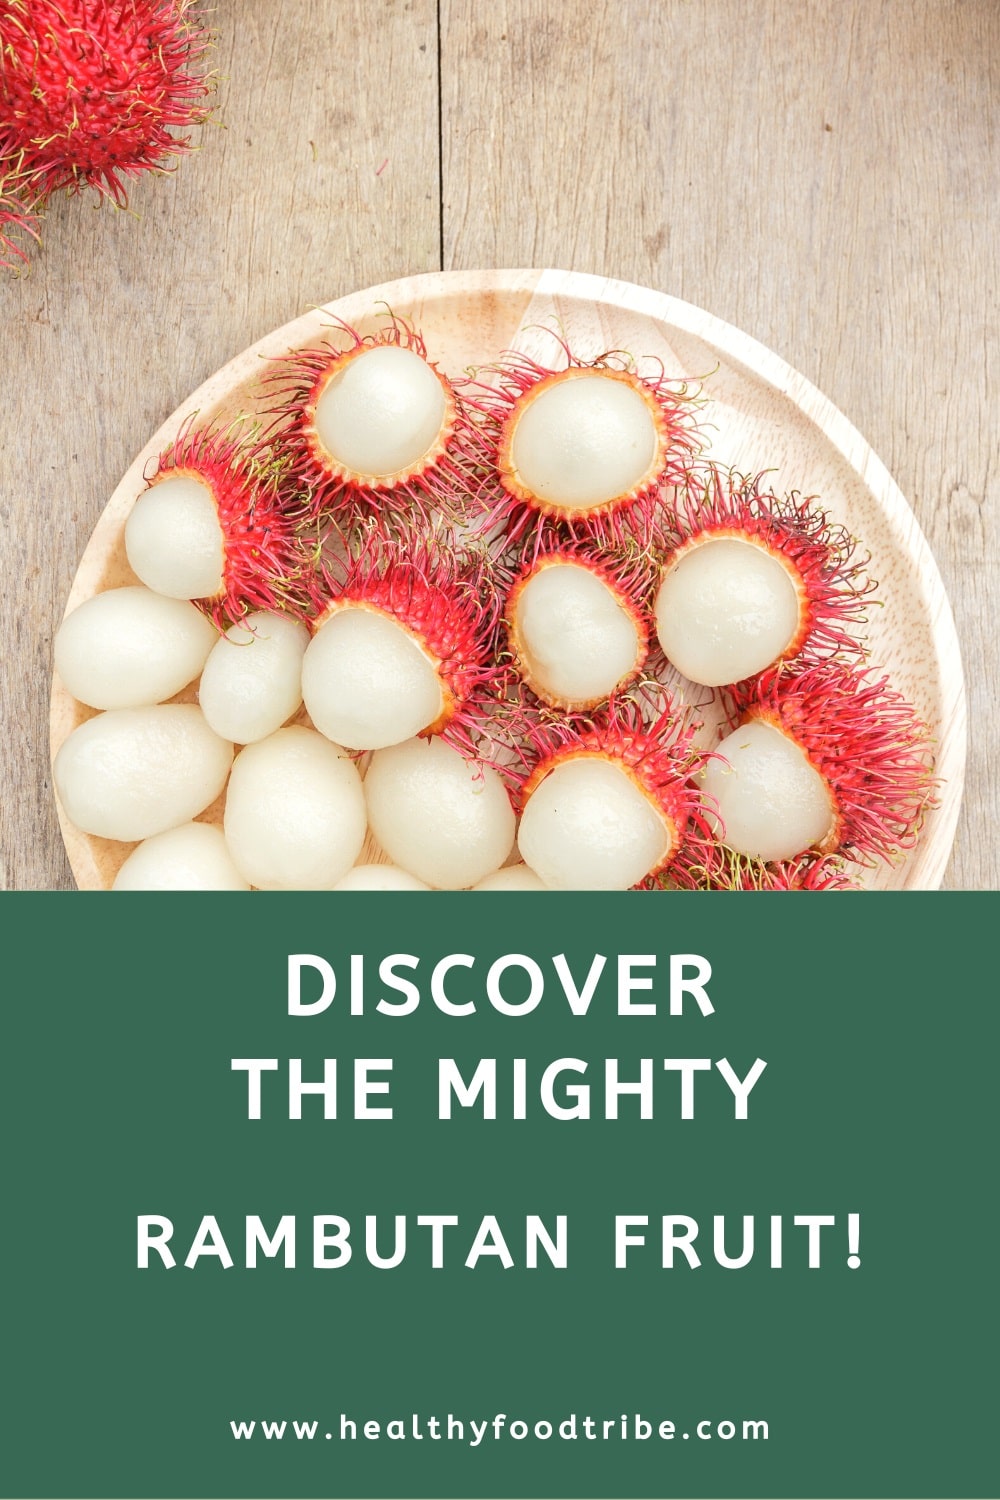 Discover the tasty rambutan fruit